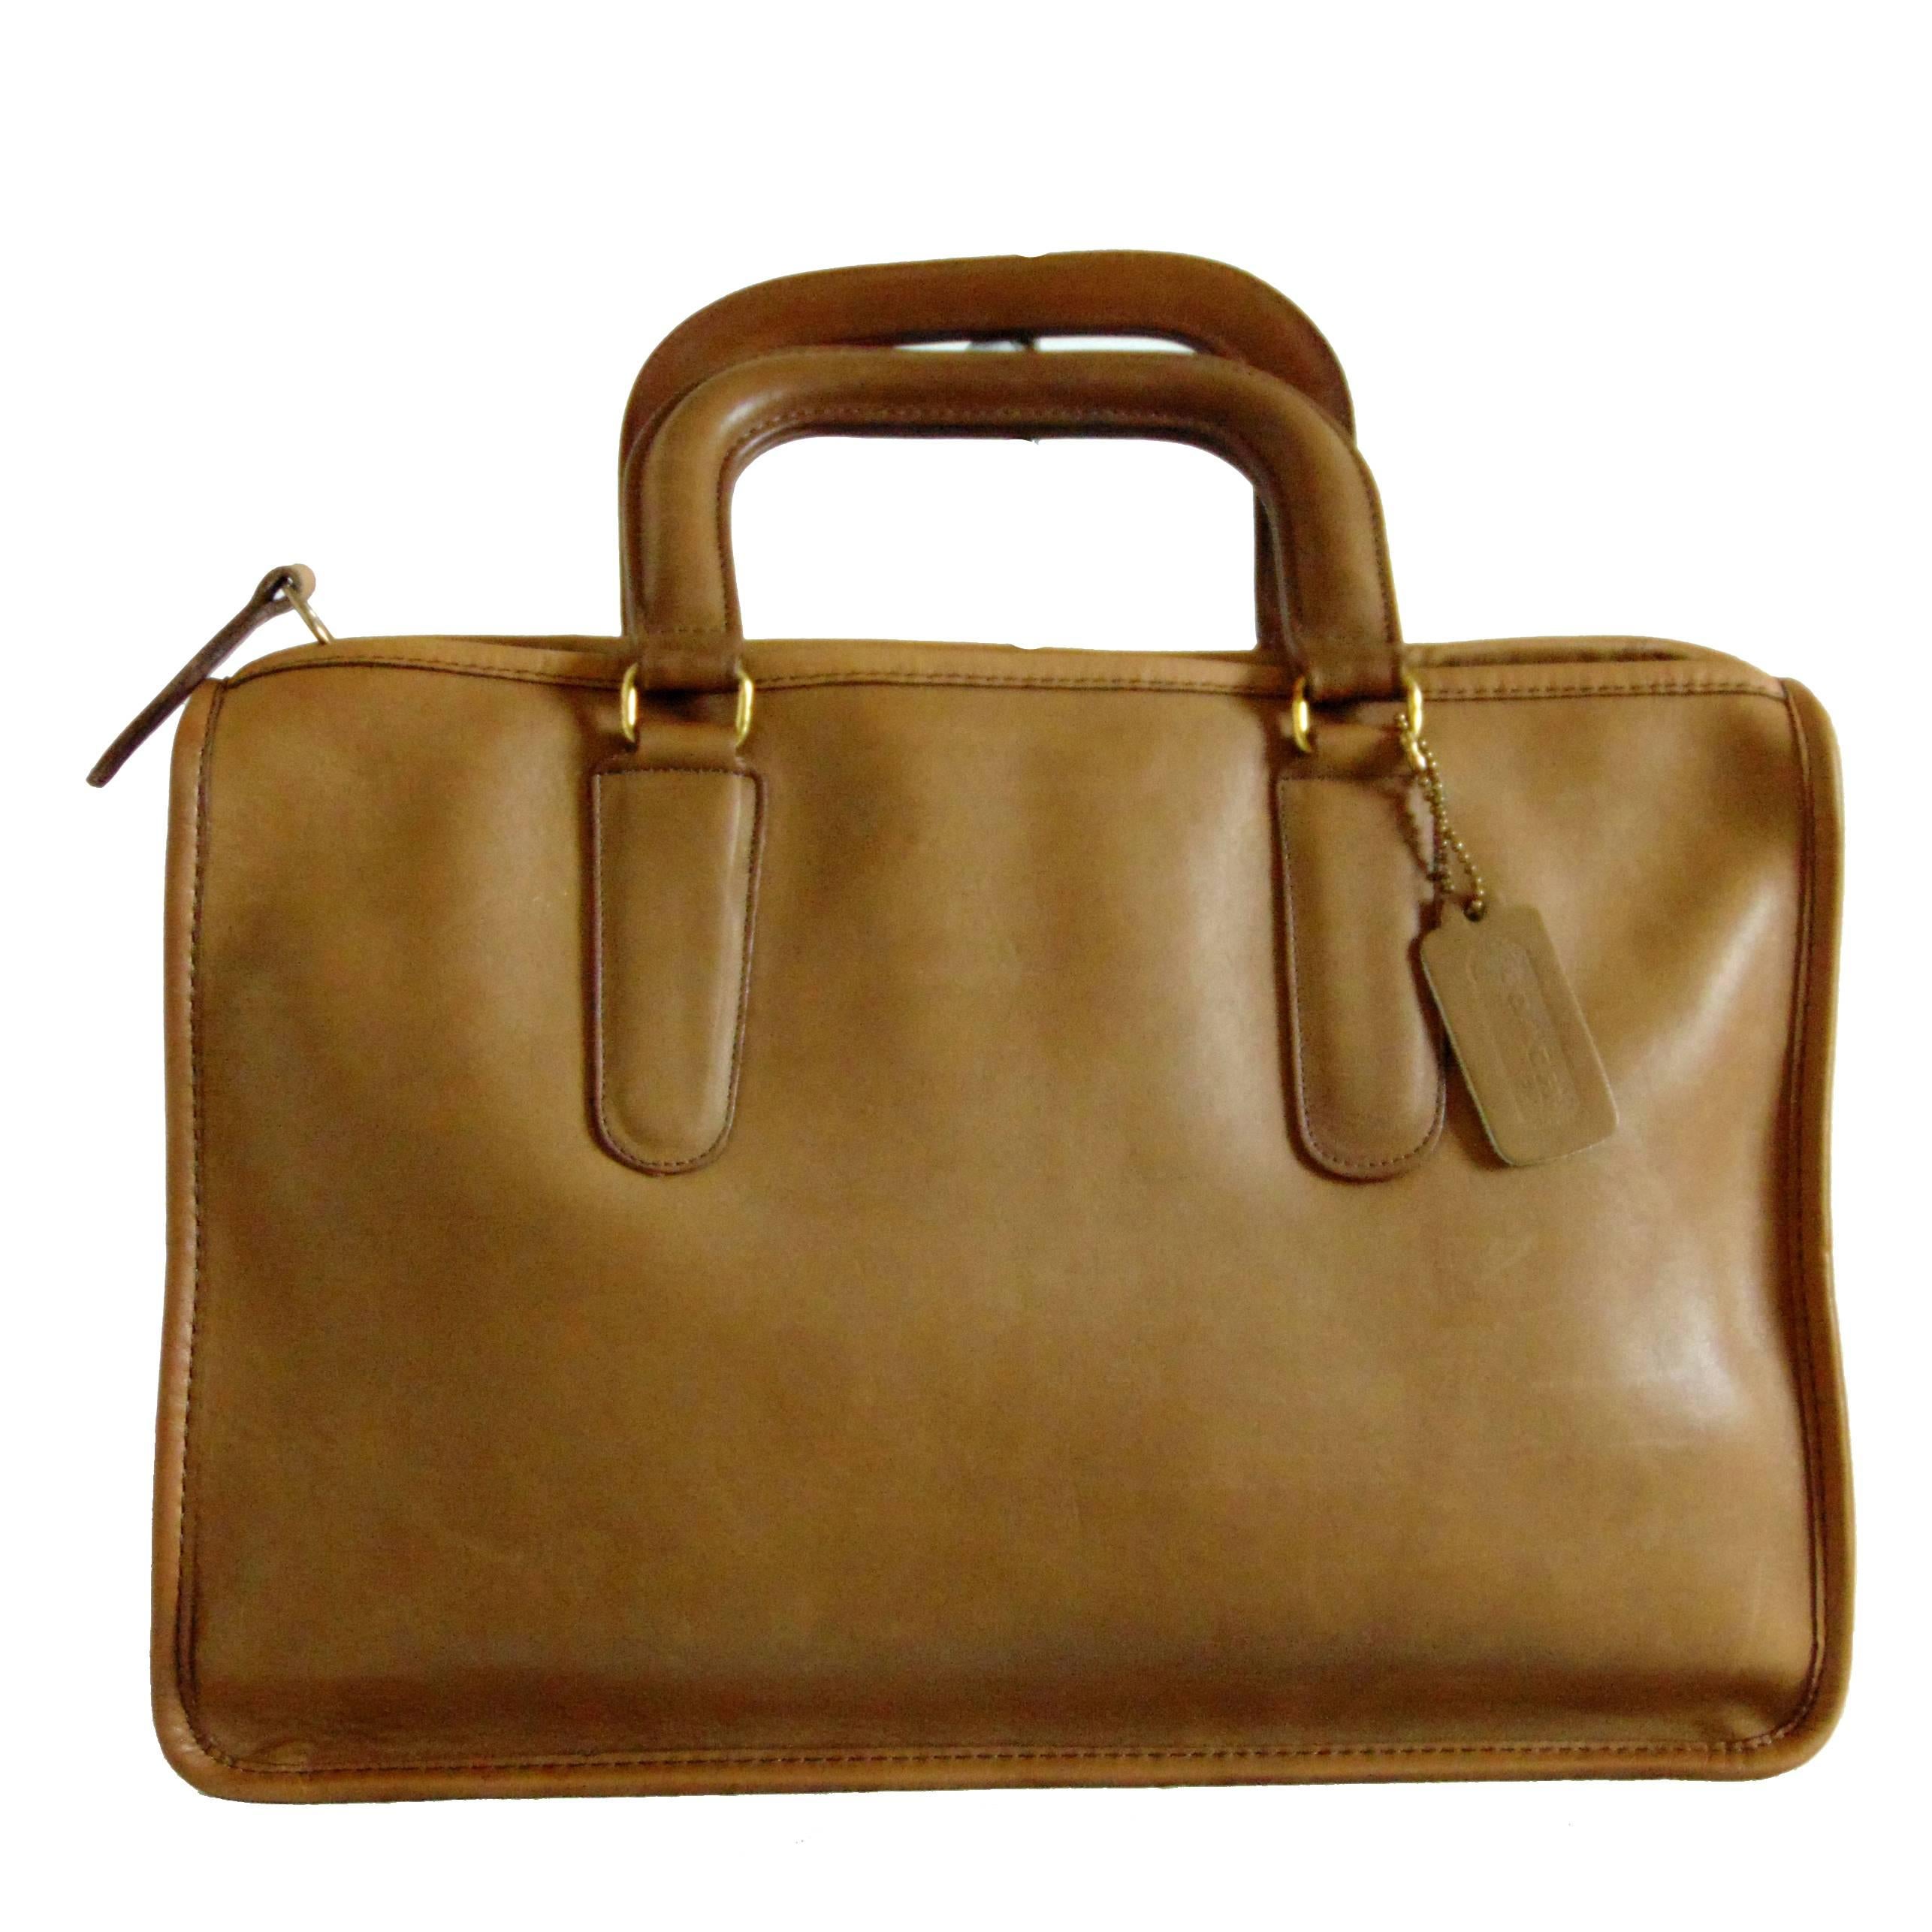 Bonnie Cashin for Coach Saddle Tan Leather Tote Bag Briefcase NYC 1960s 